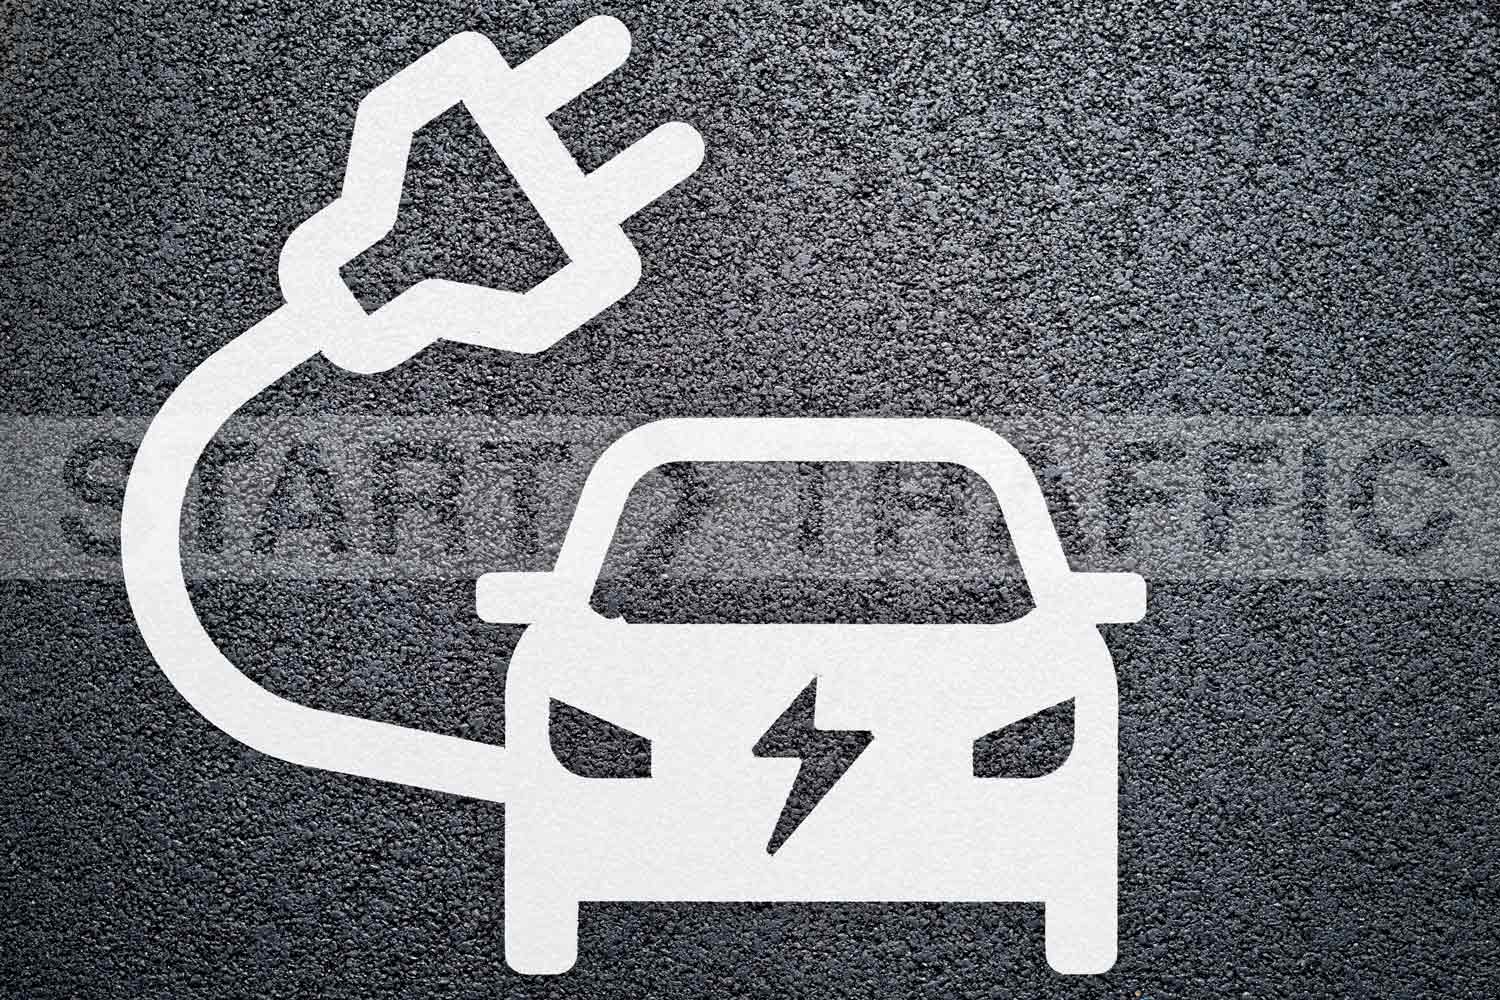 Car and power chord style logo alternative